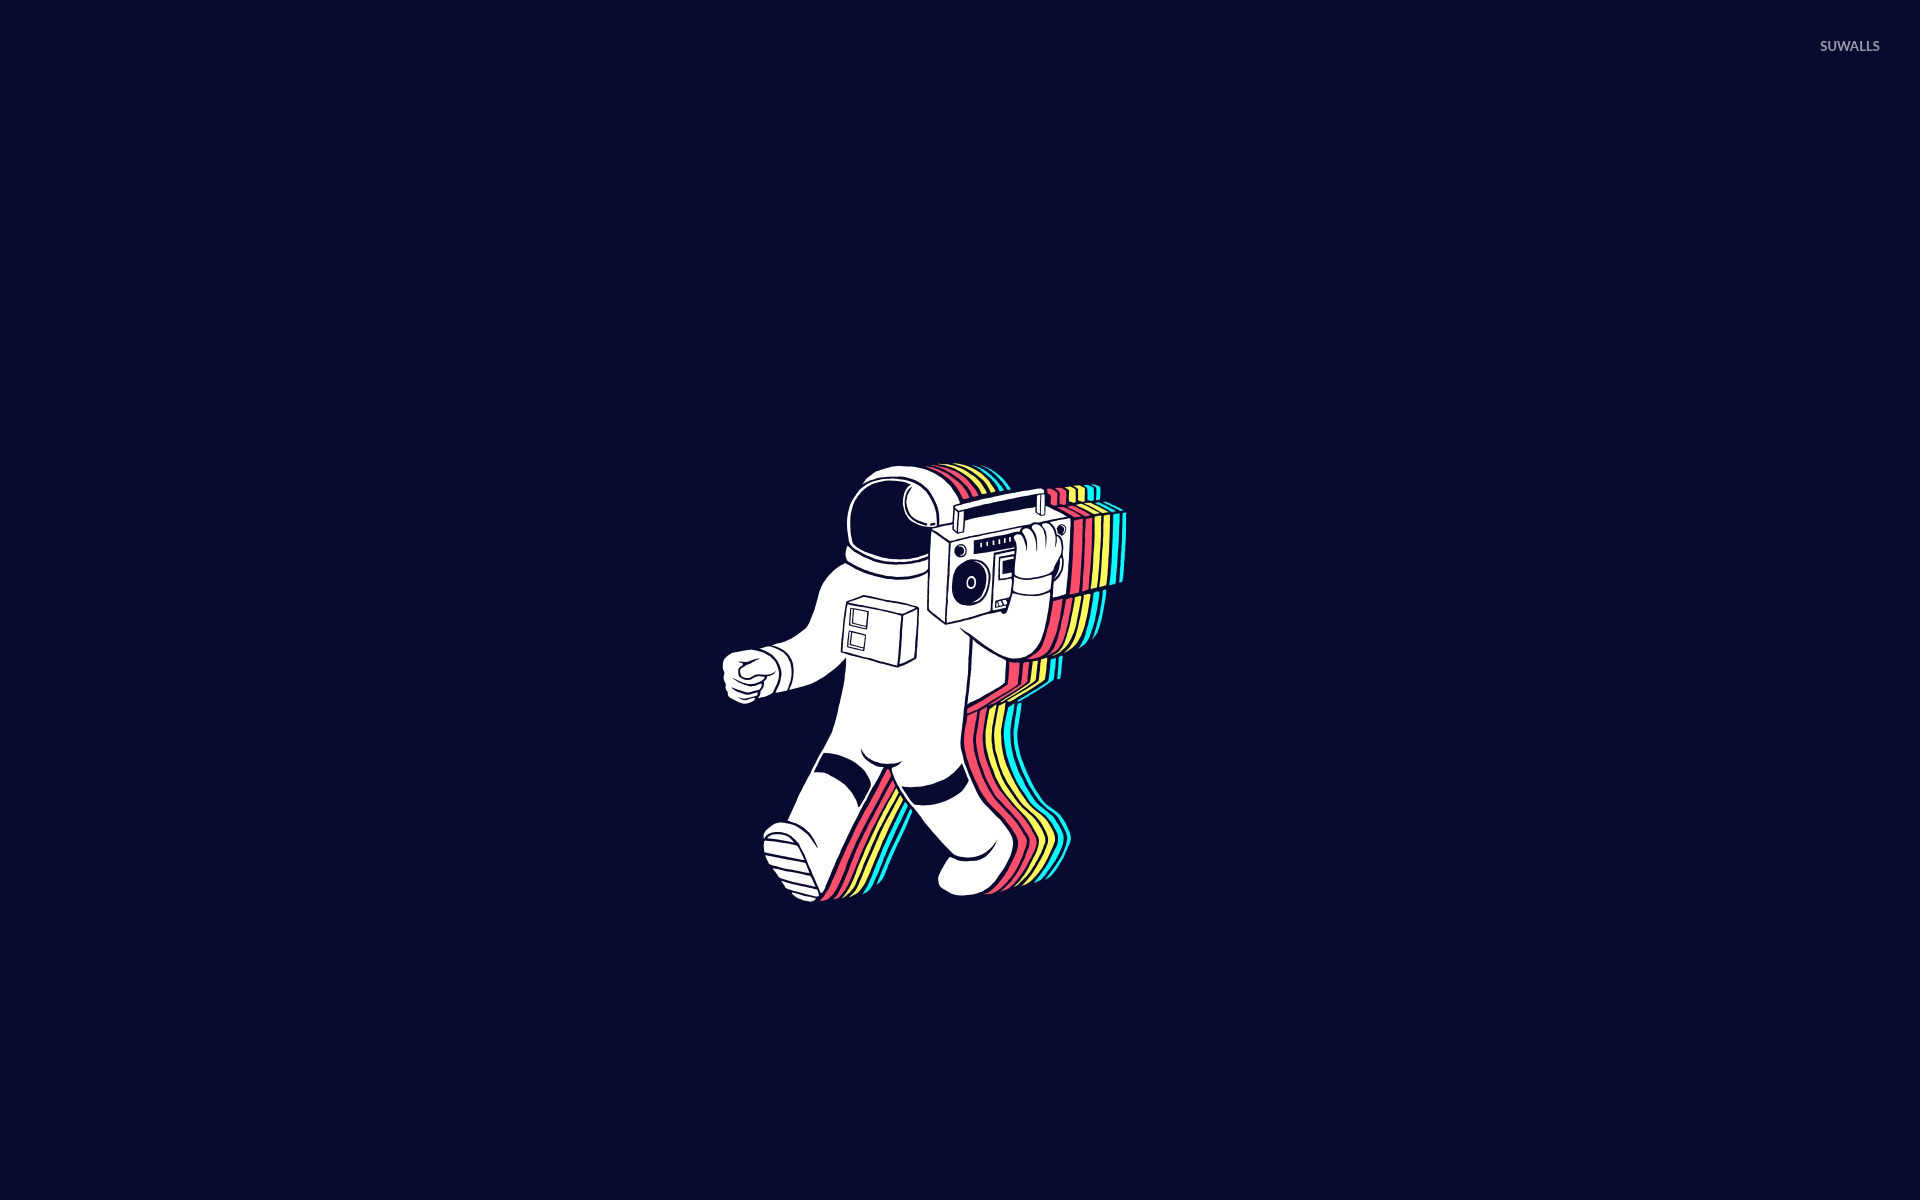 Party astronaut wallpaper - Music